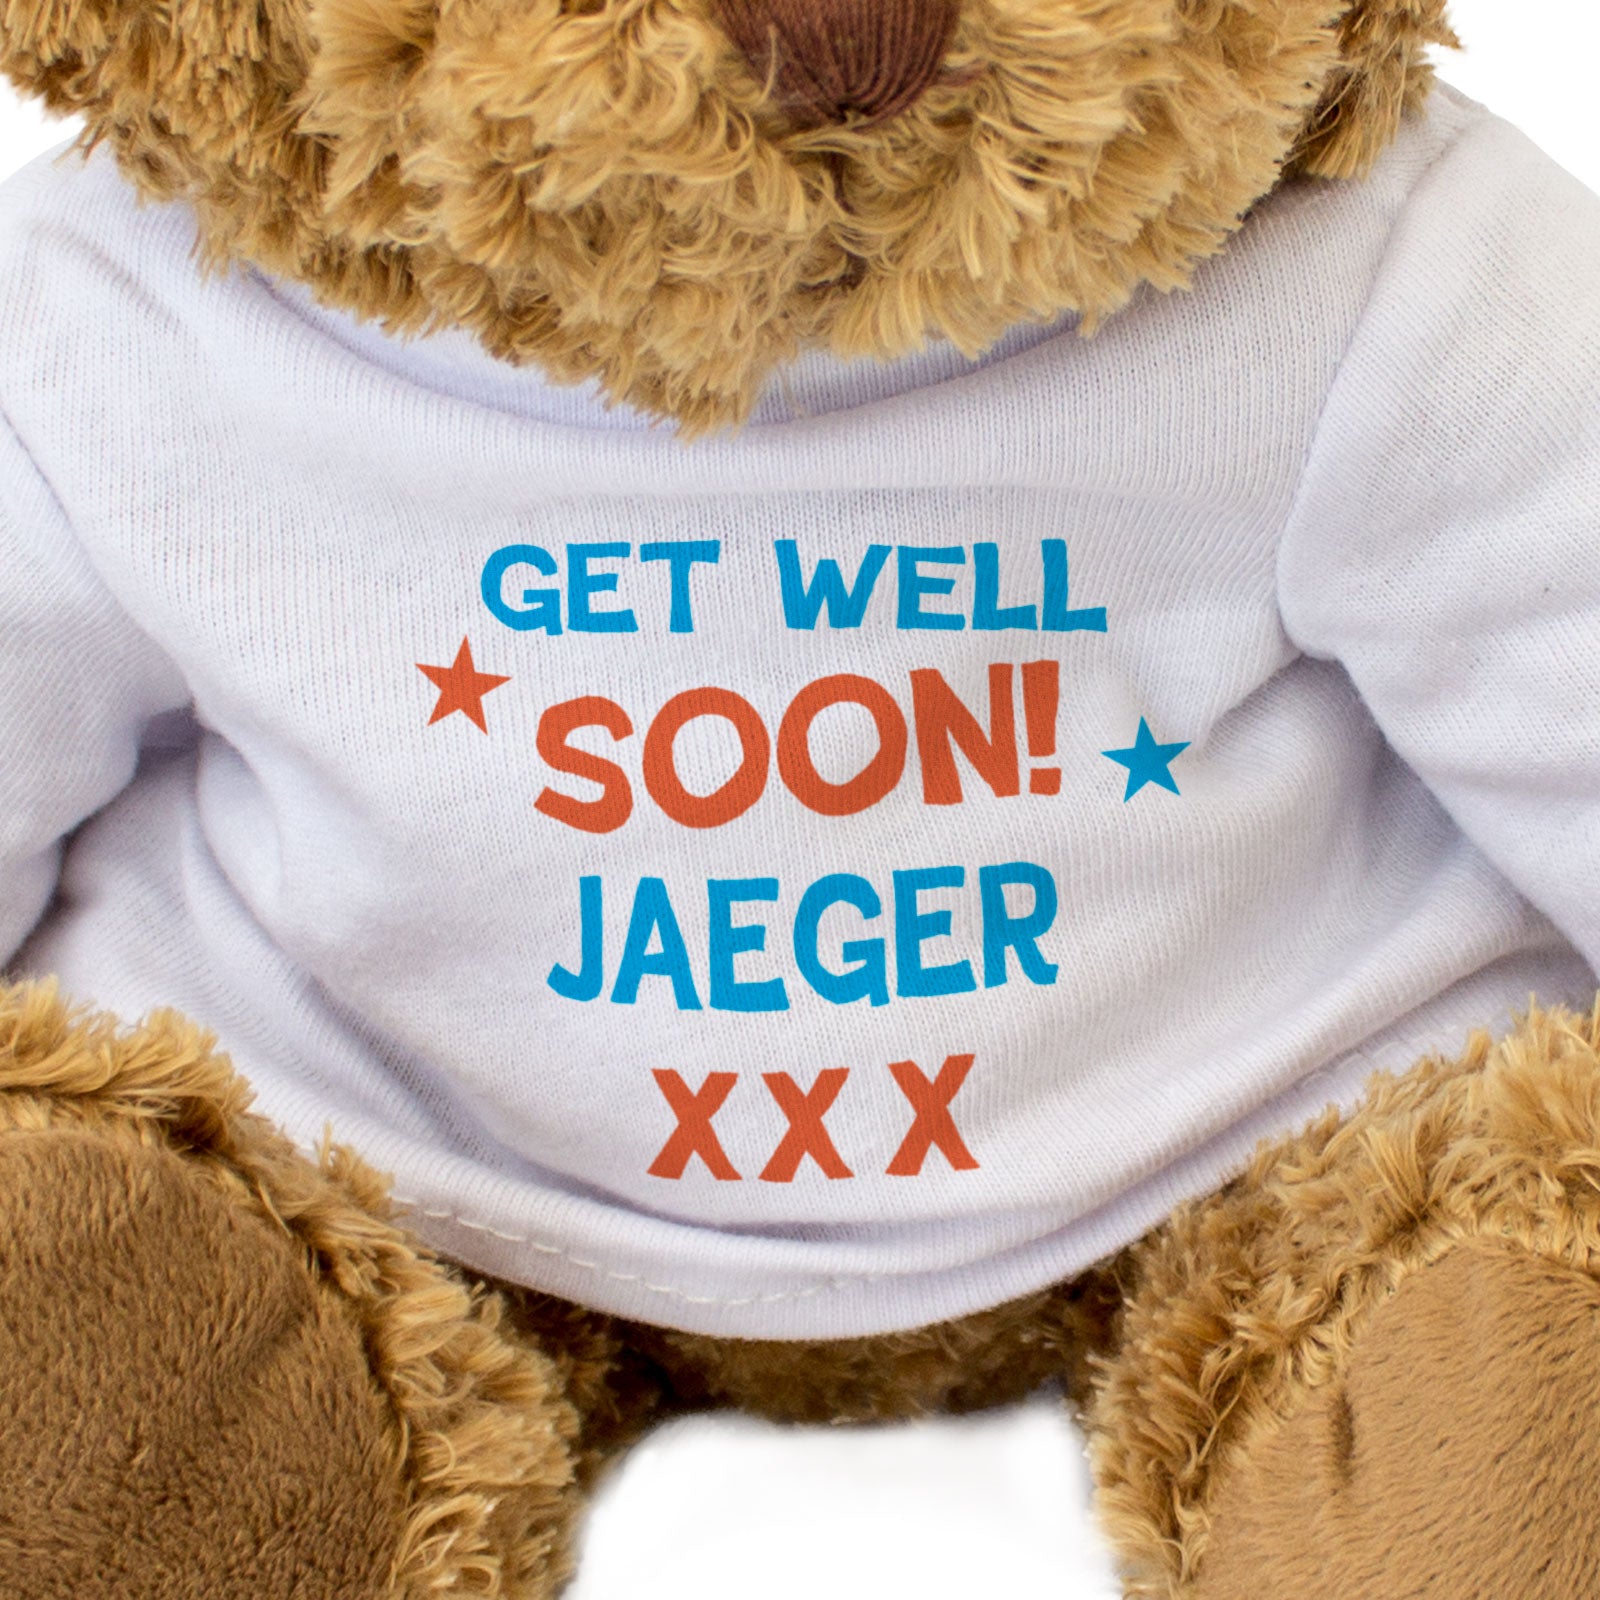 Get Well Soon Jaeger - Teddy Bear